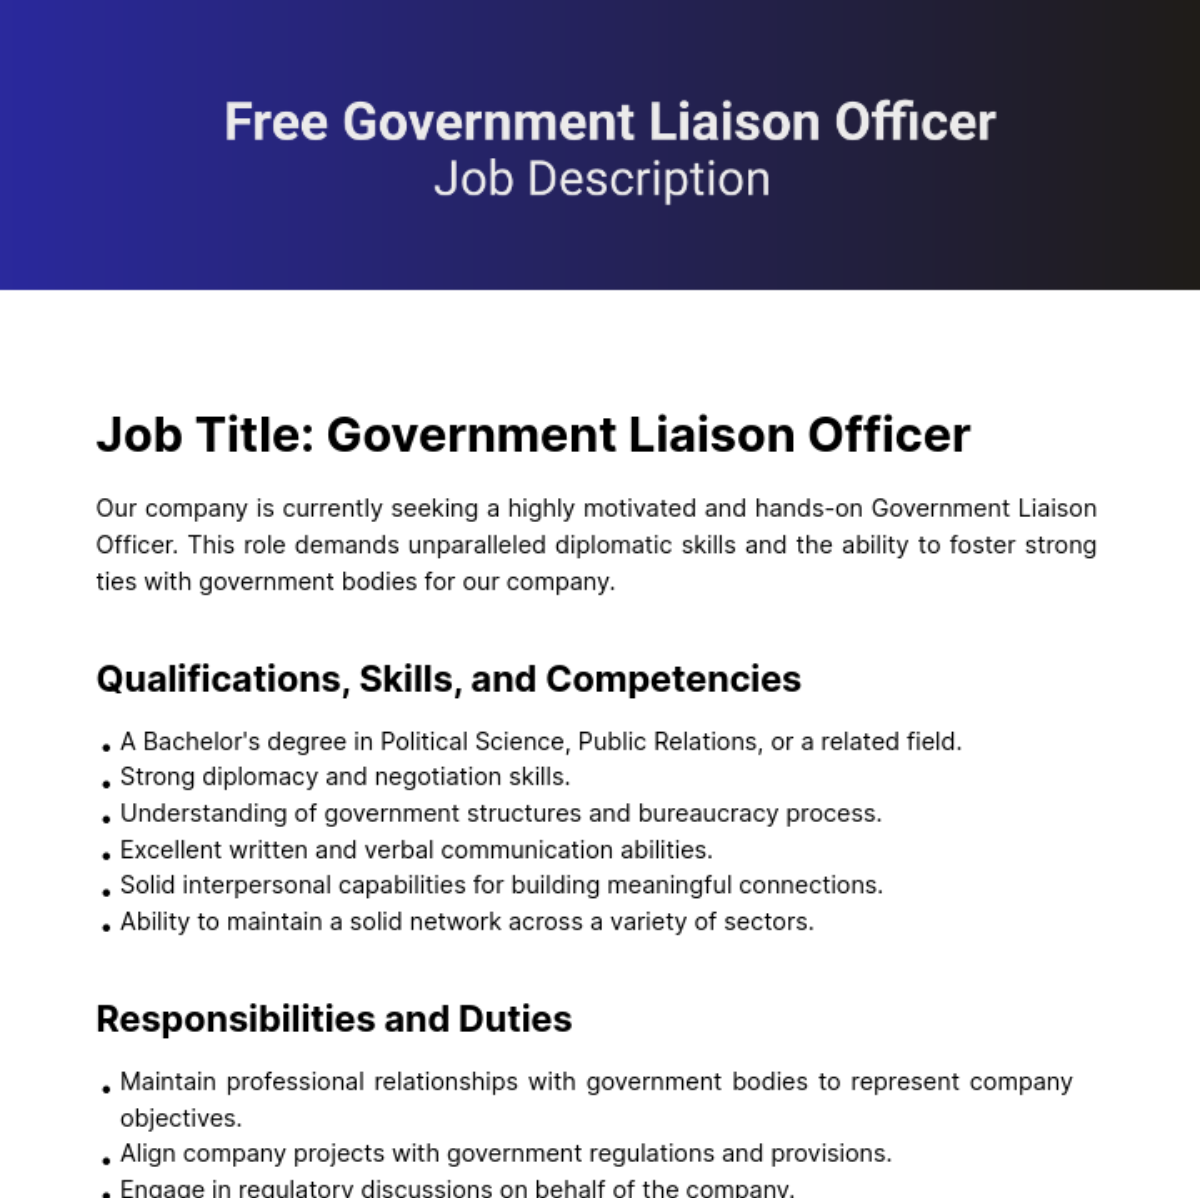 Free Government Liaison Officer Job Description Template